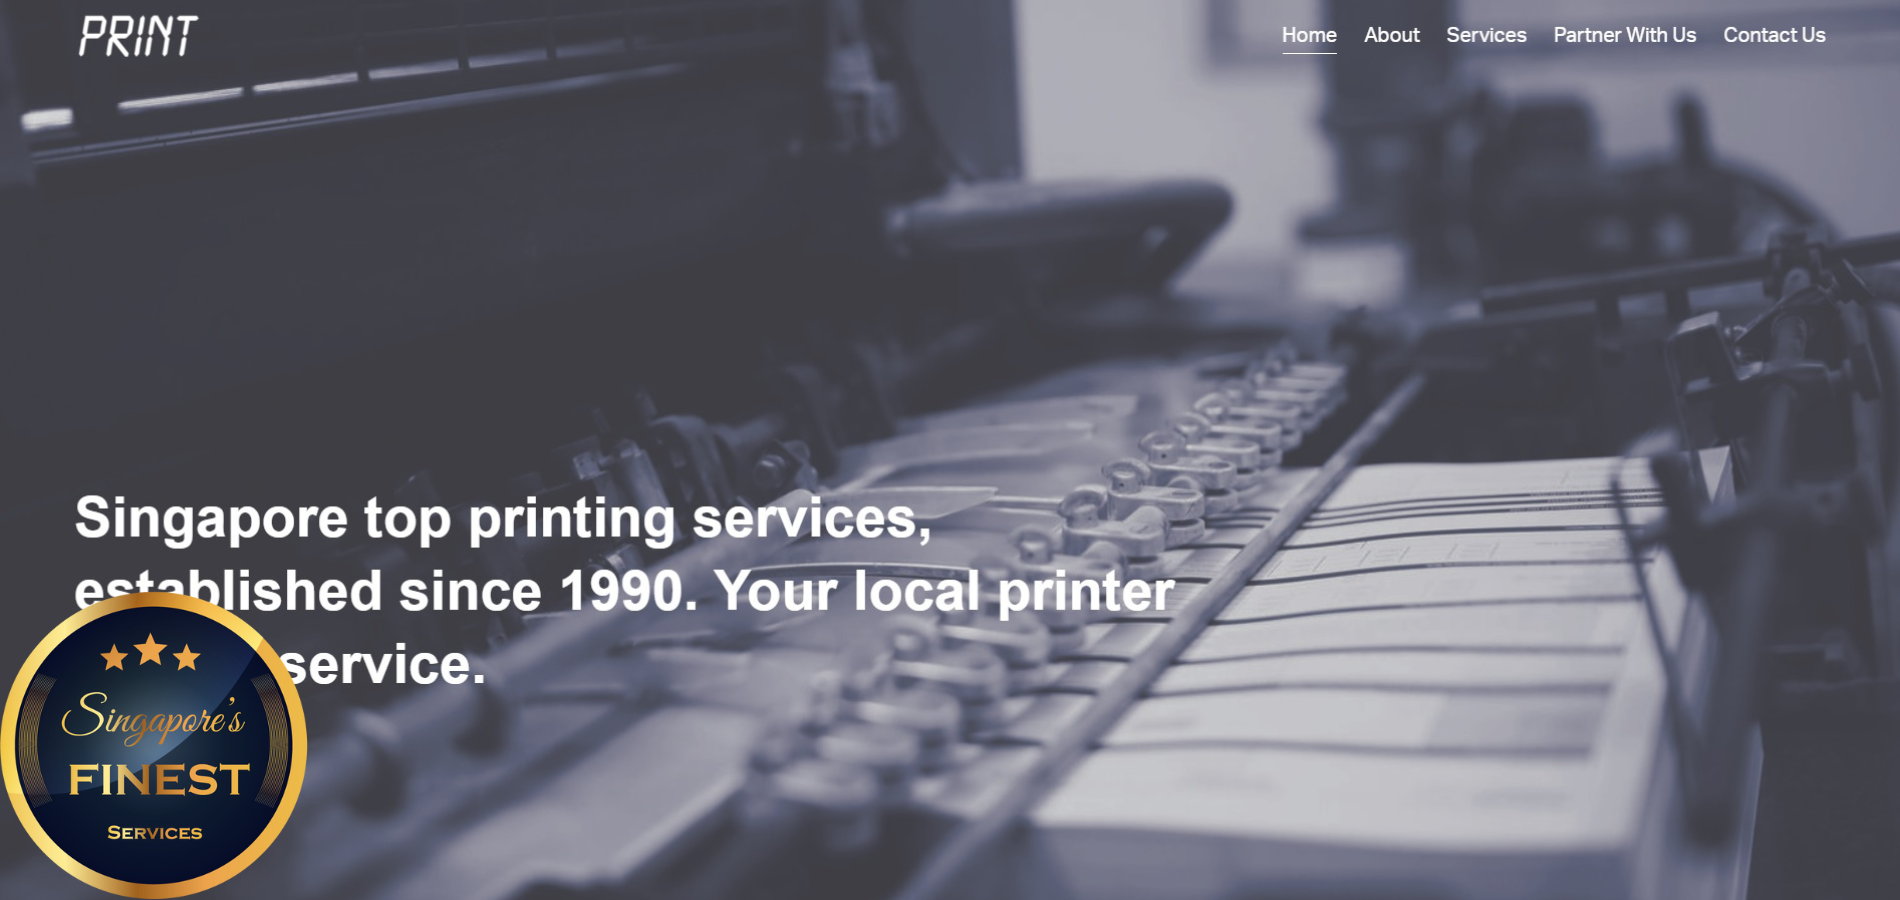 Print N Print - Printing Services Singapore